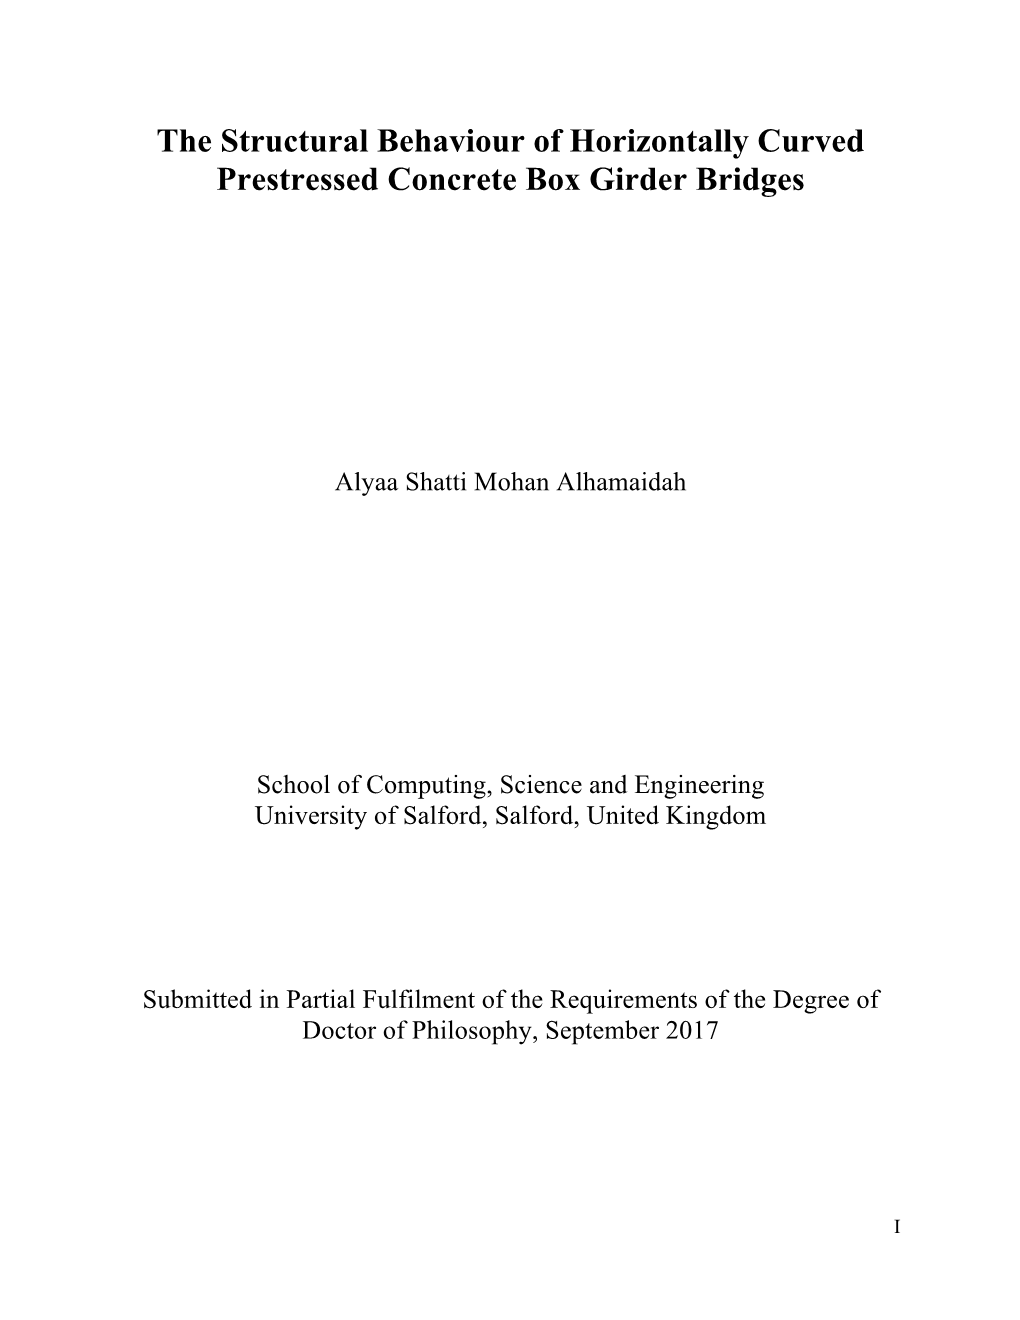 The Structural Behaviour of Horizontally Curved Prestressed Concrete Box Girder Bridges